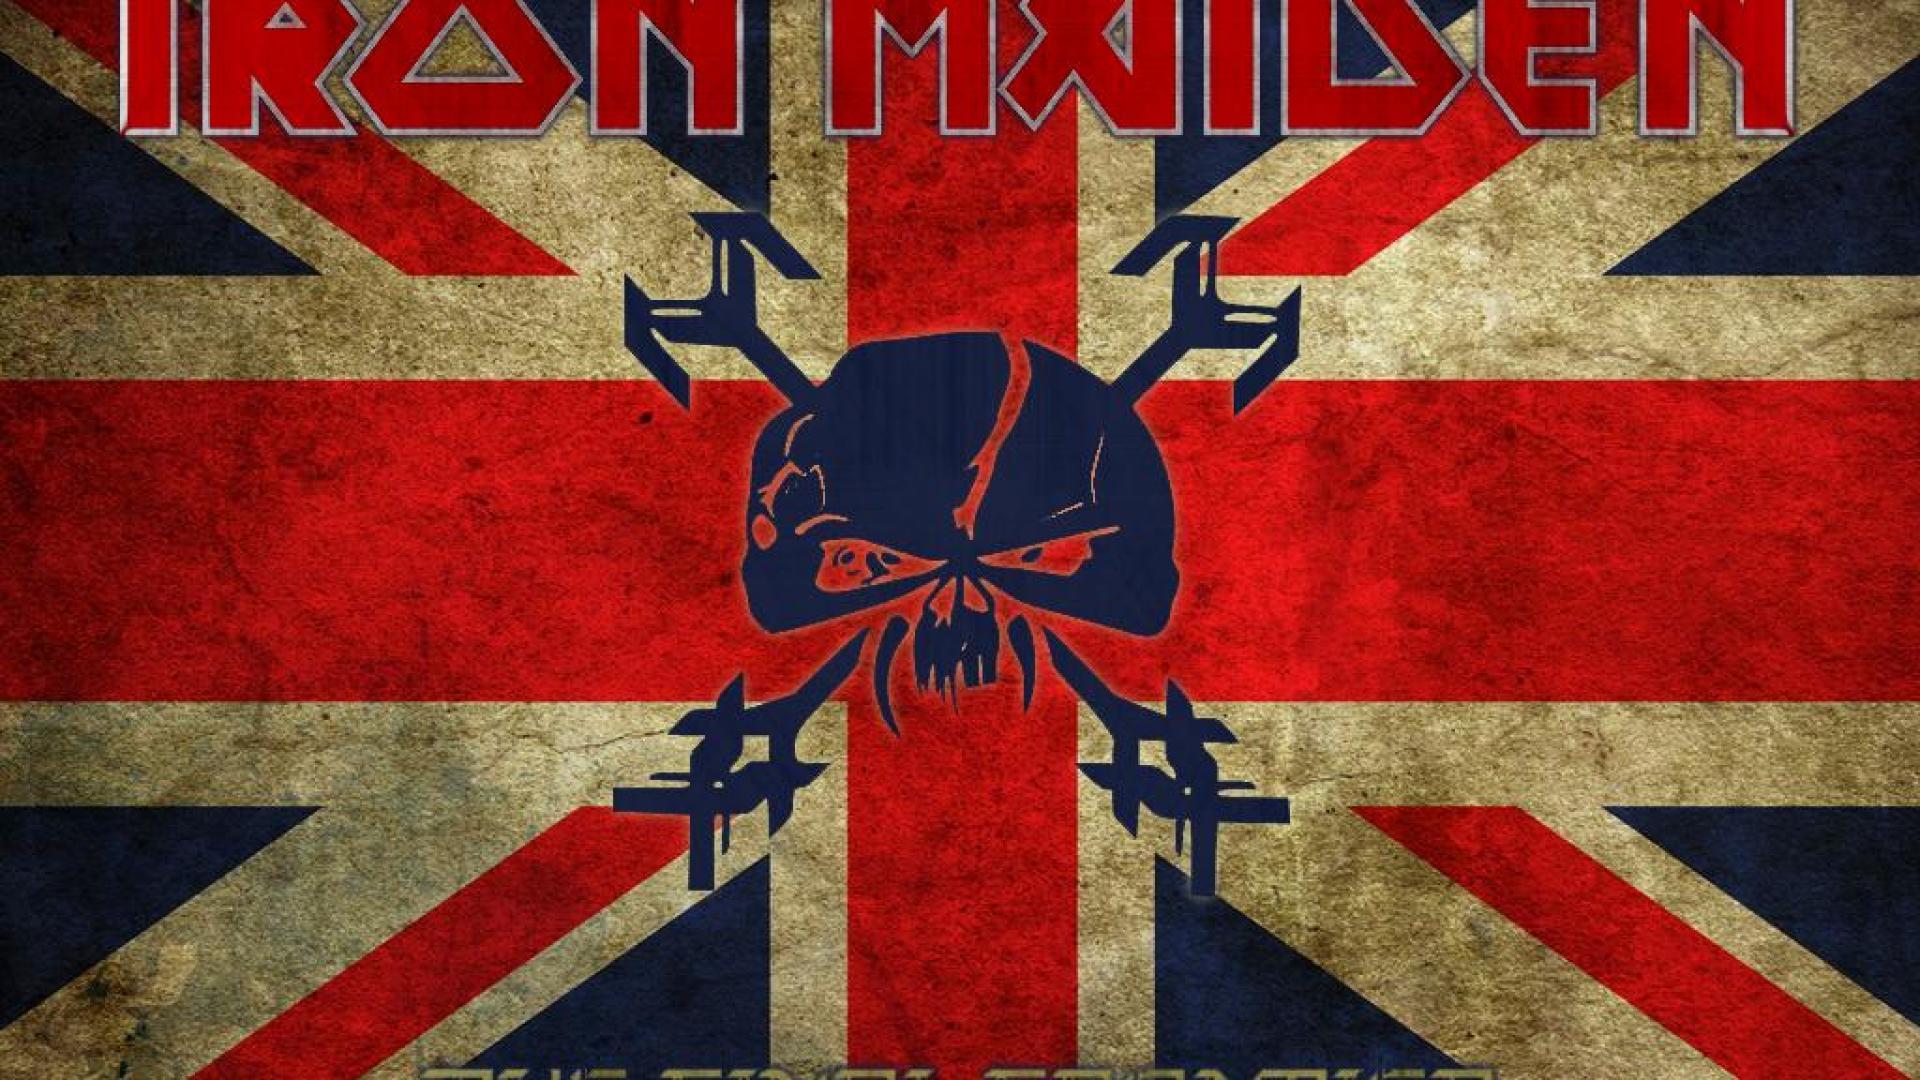 Iron Maiden HD Background Wallpaper 23509